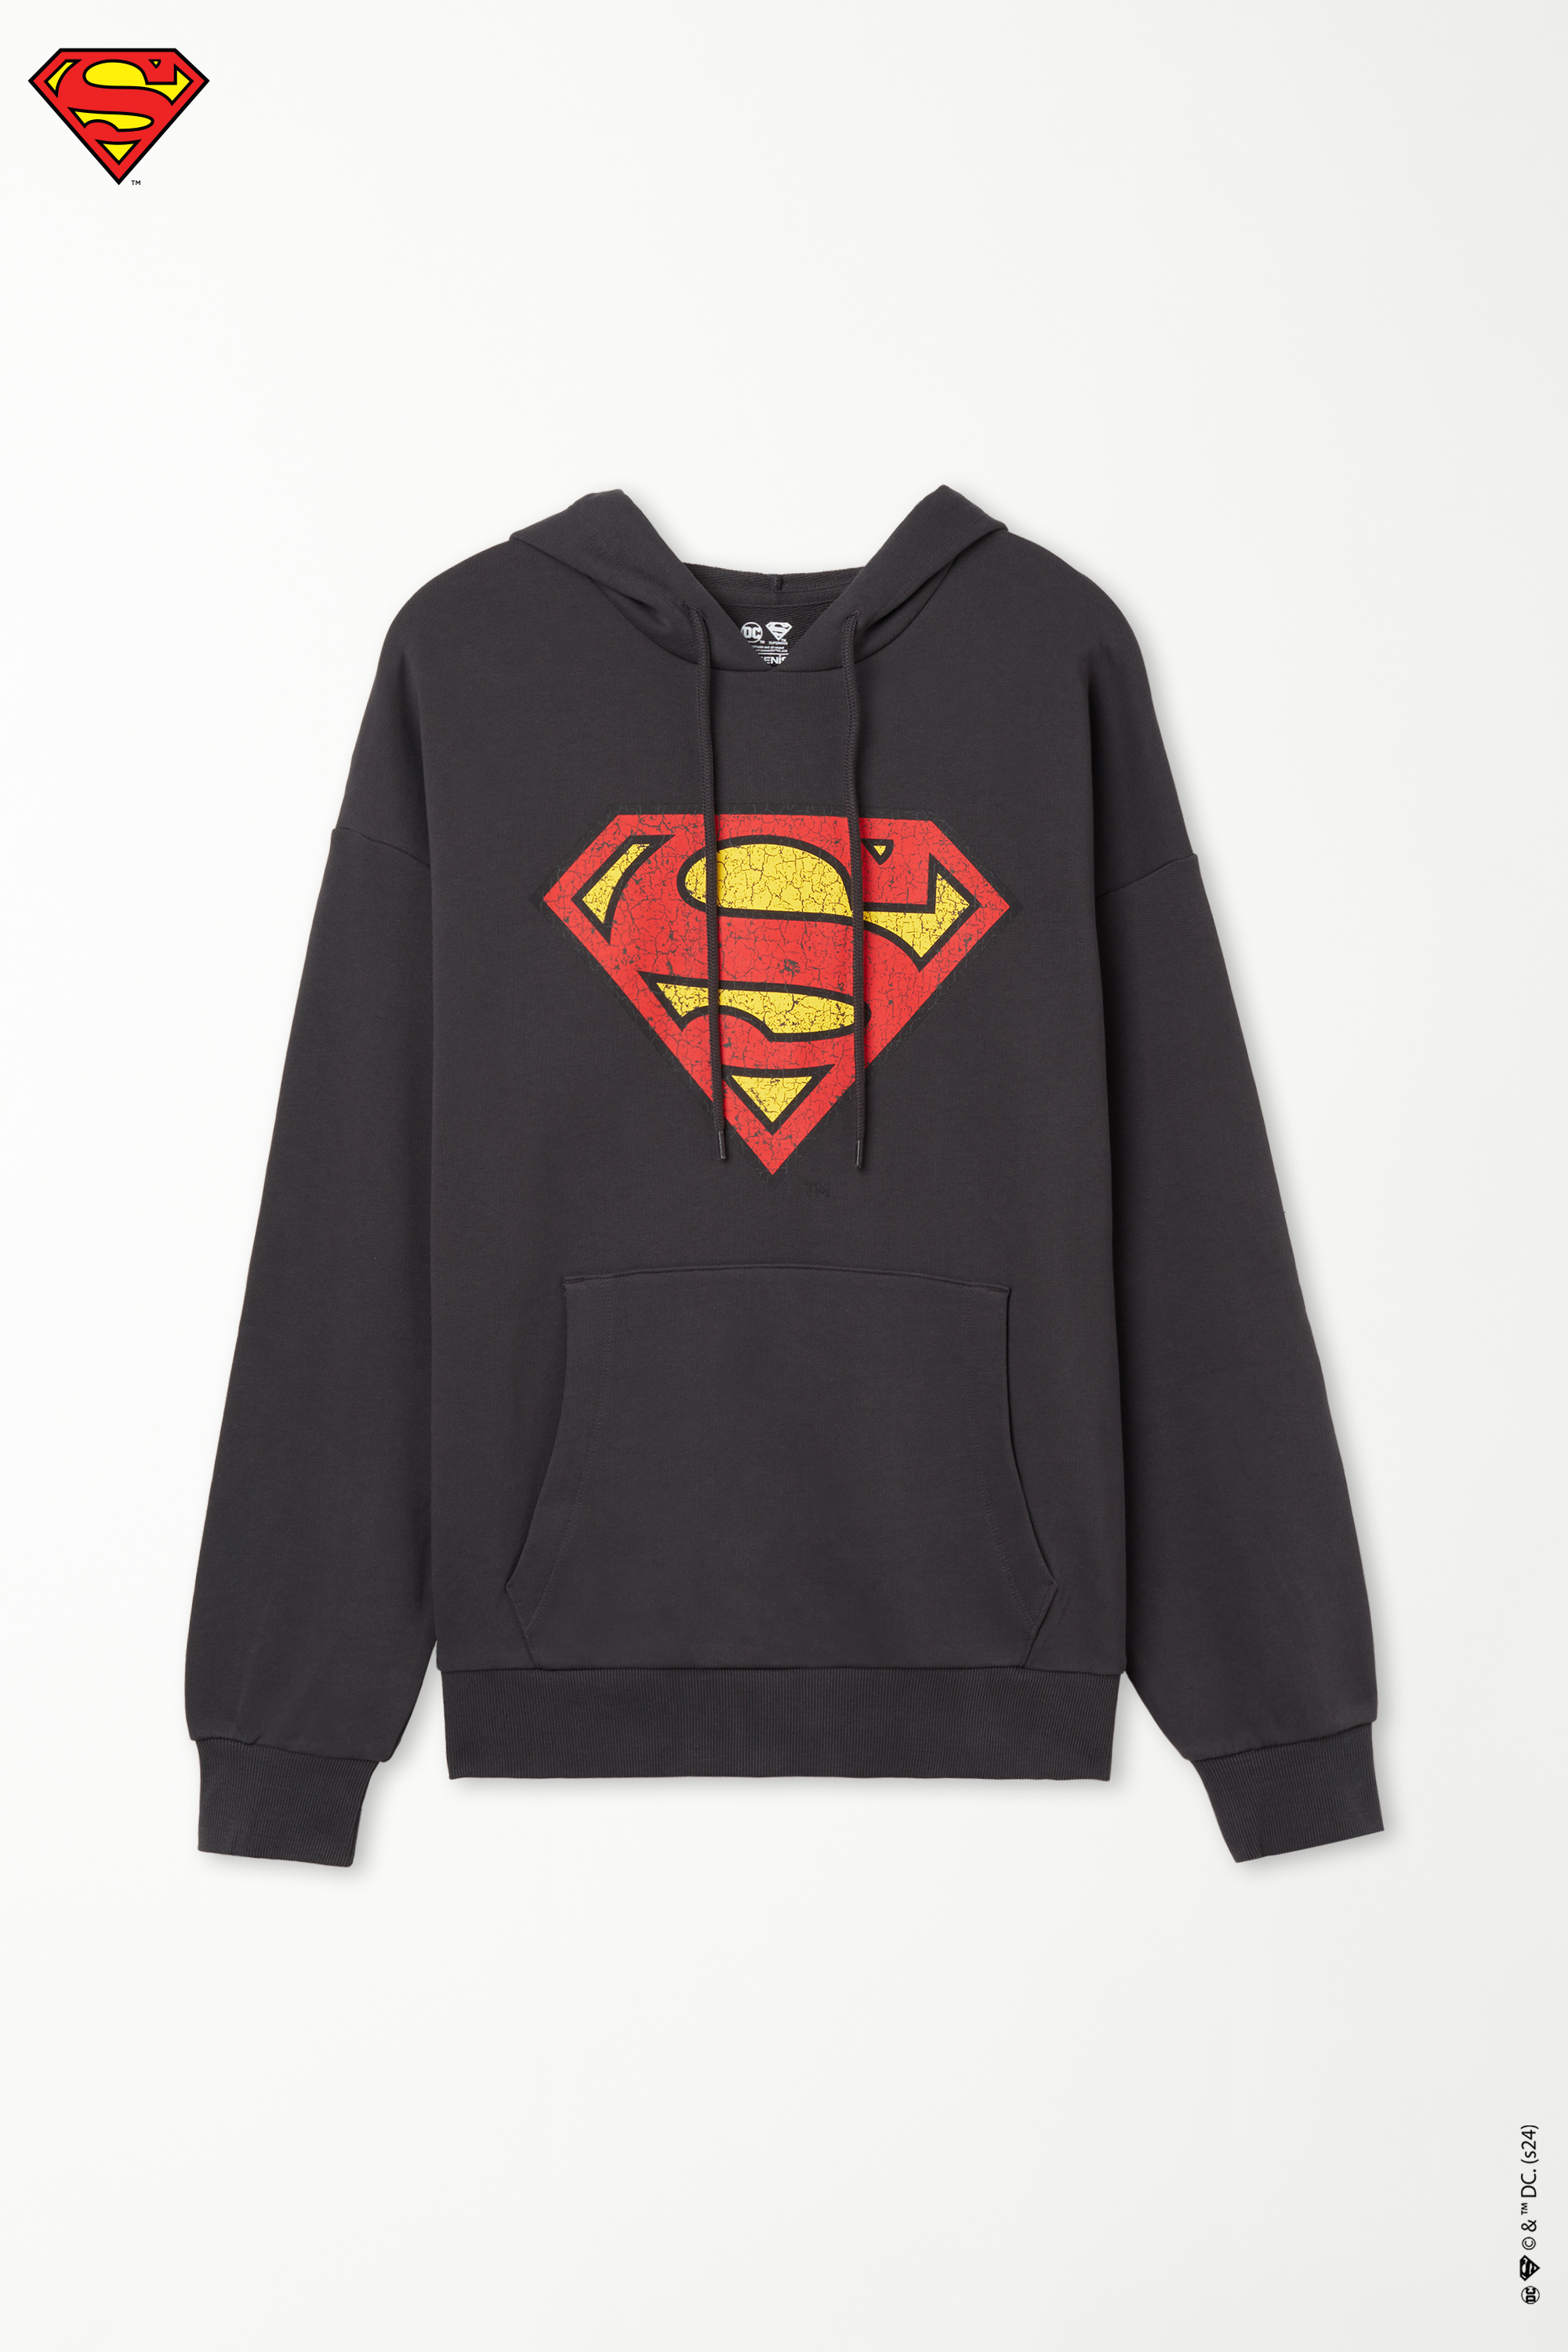 Sweatshirt Felpa Manga Comprida com Capuz Estampado Superman